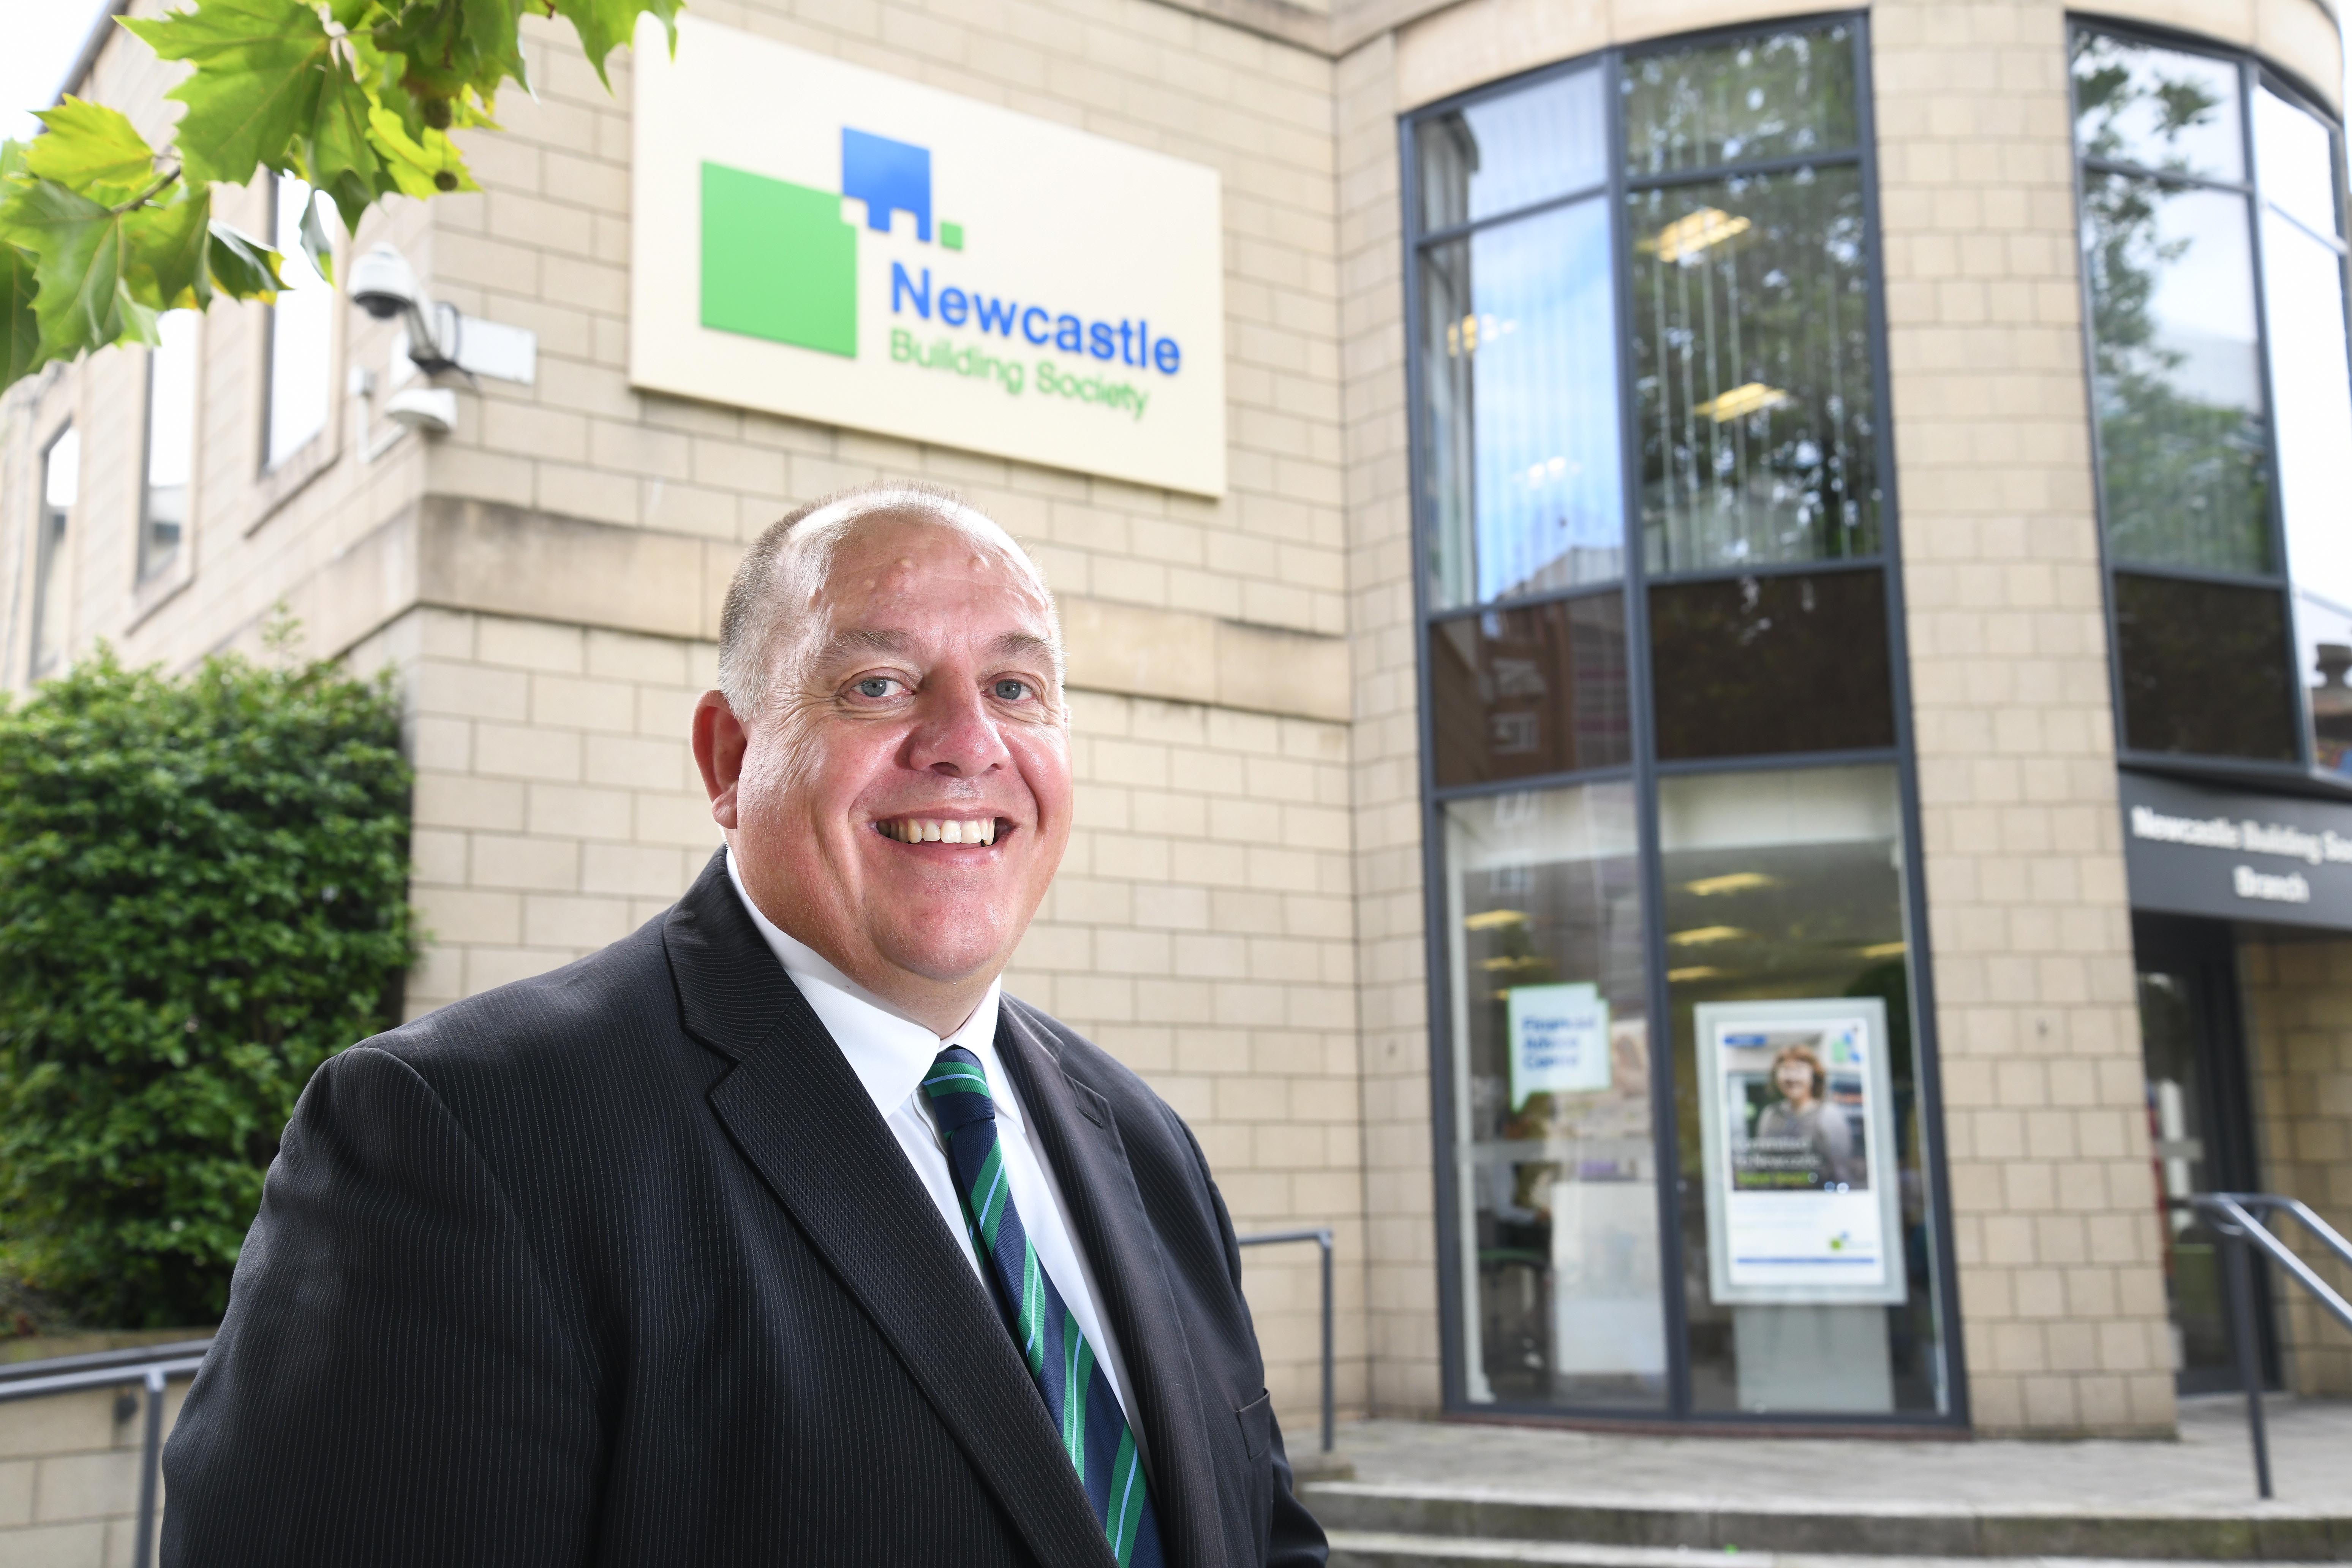 Newcastle Intermediaries re-enters high LTV mortgage market